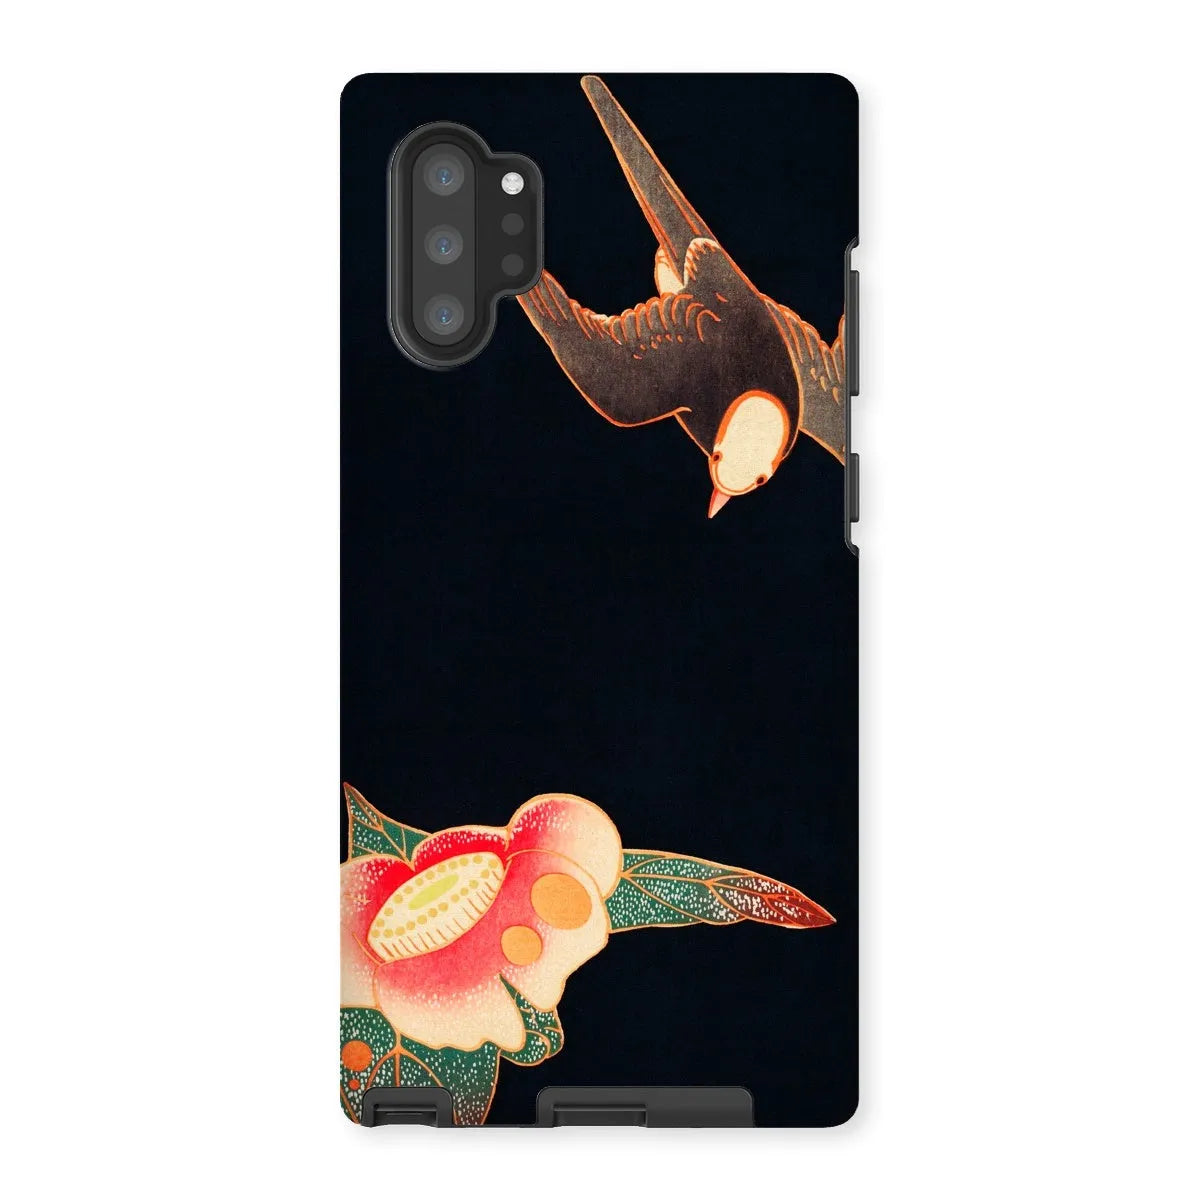 Swallow & Camellia - Meiji Era Art Phone Case - Ito Jakuchu - Samsung Galaxy Note 10p / Matte - Mobile Phone Cases